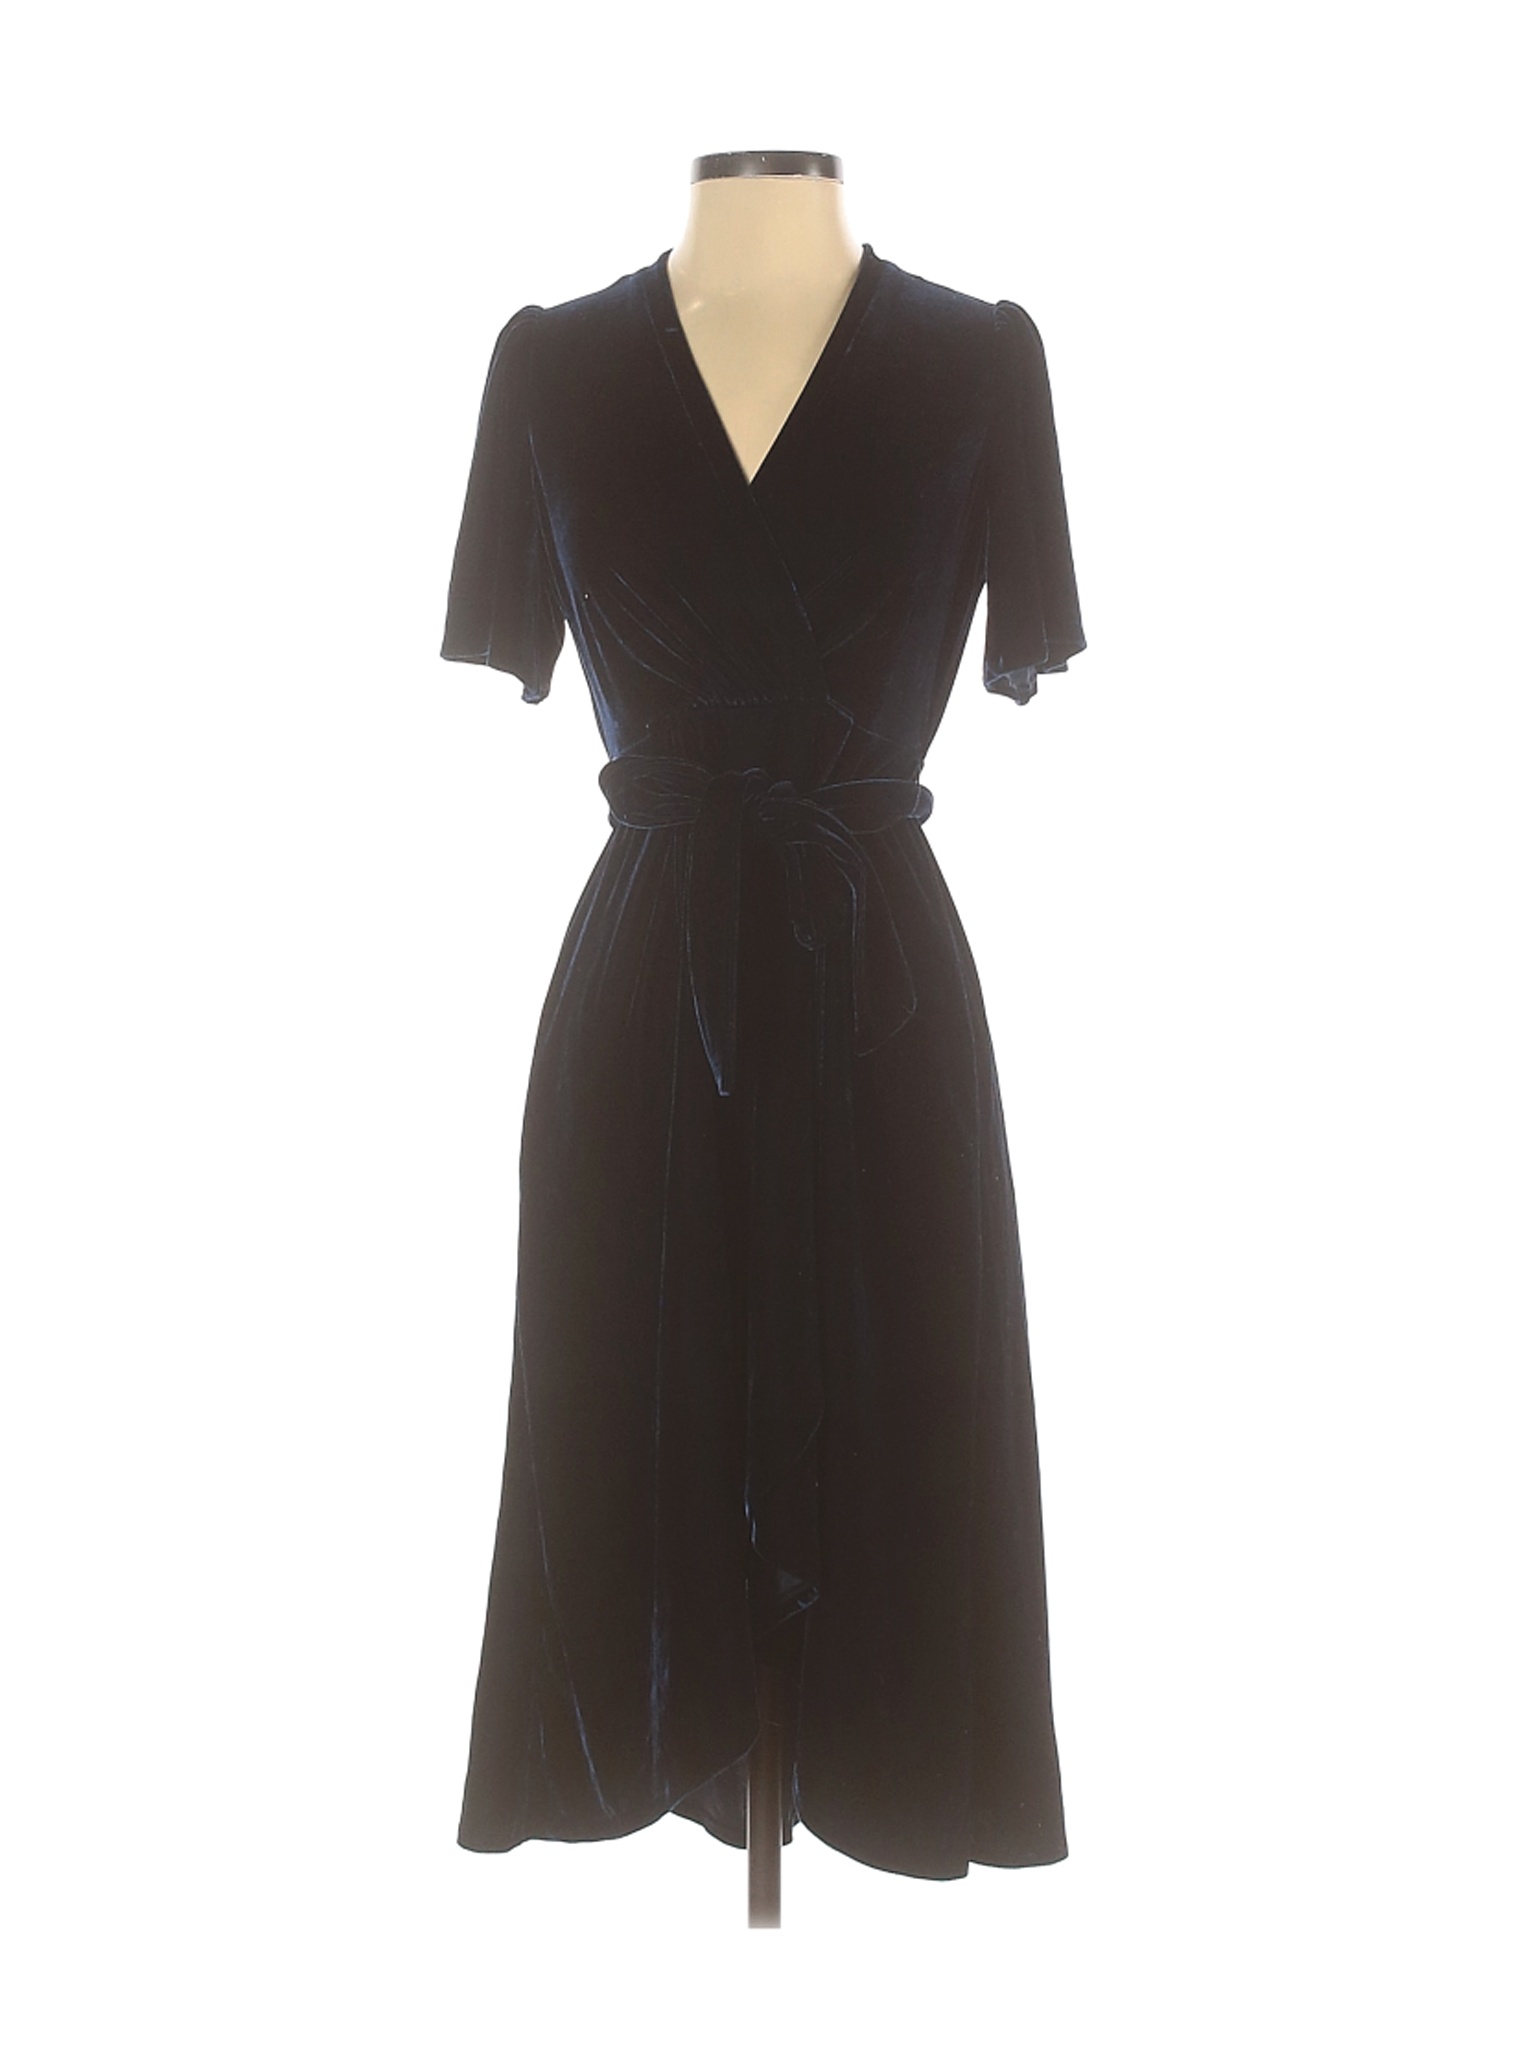 Donna Morgan Women Black Cocktail Dress 4 Petites | eBay